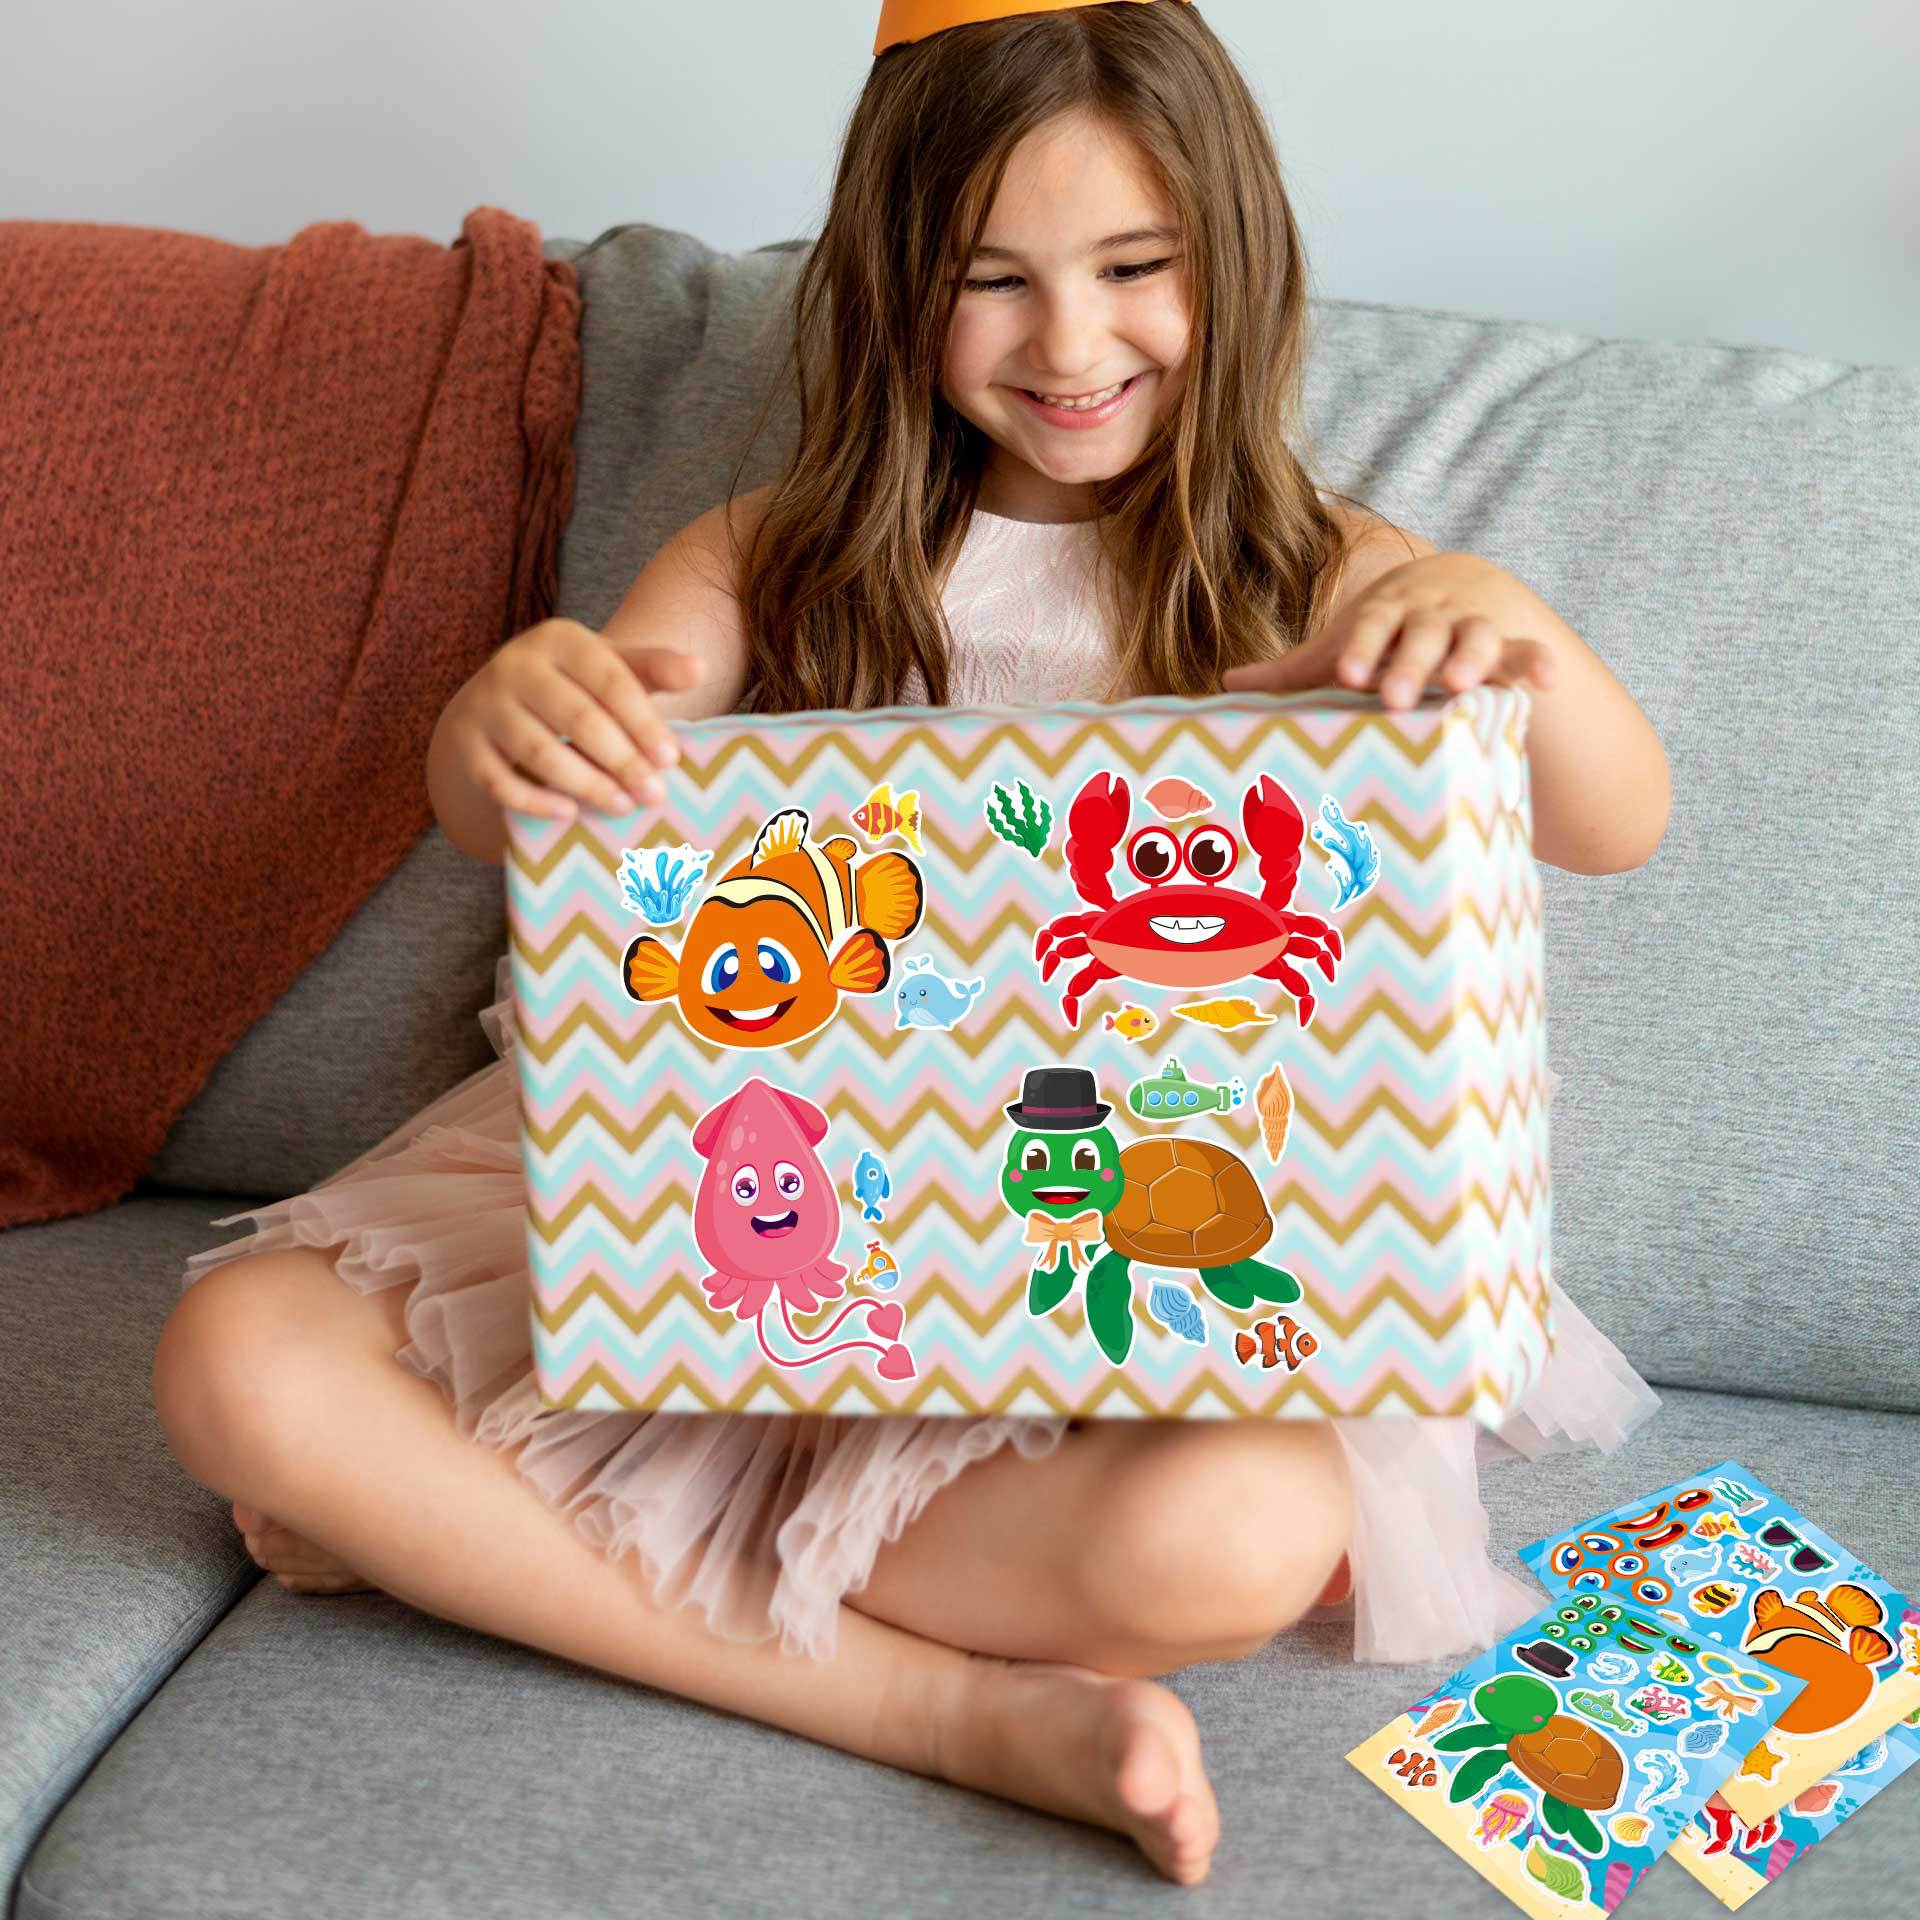 32 Sheets Cartoon Ocean Animals Make Your Own Stickers for Kids - TTpen